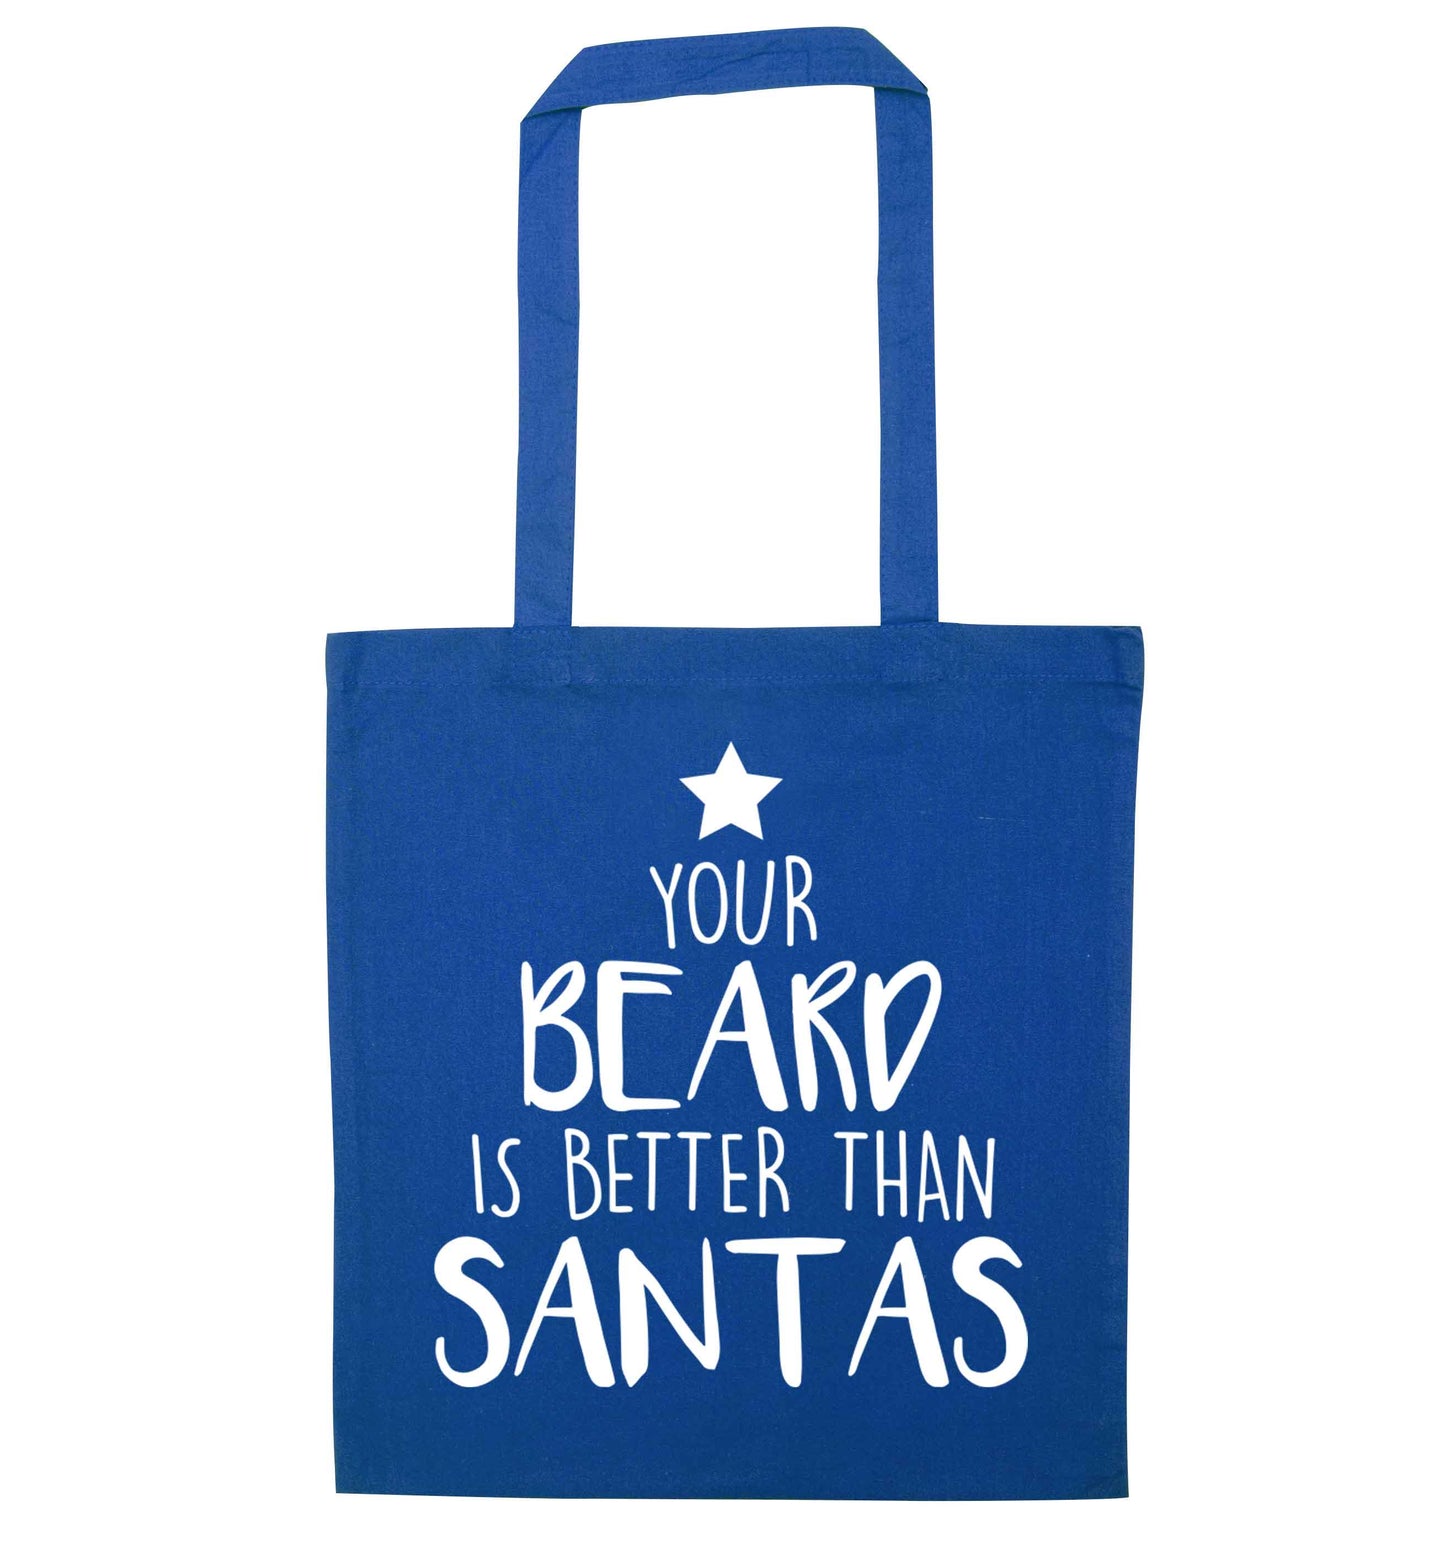 Your Beard Better than Santas blue tote bag